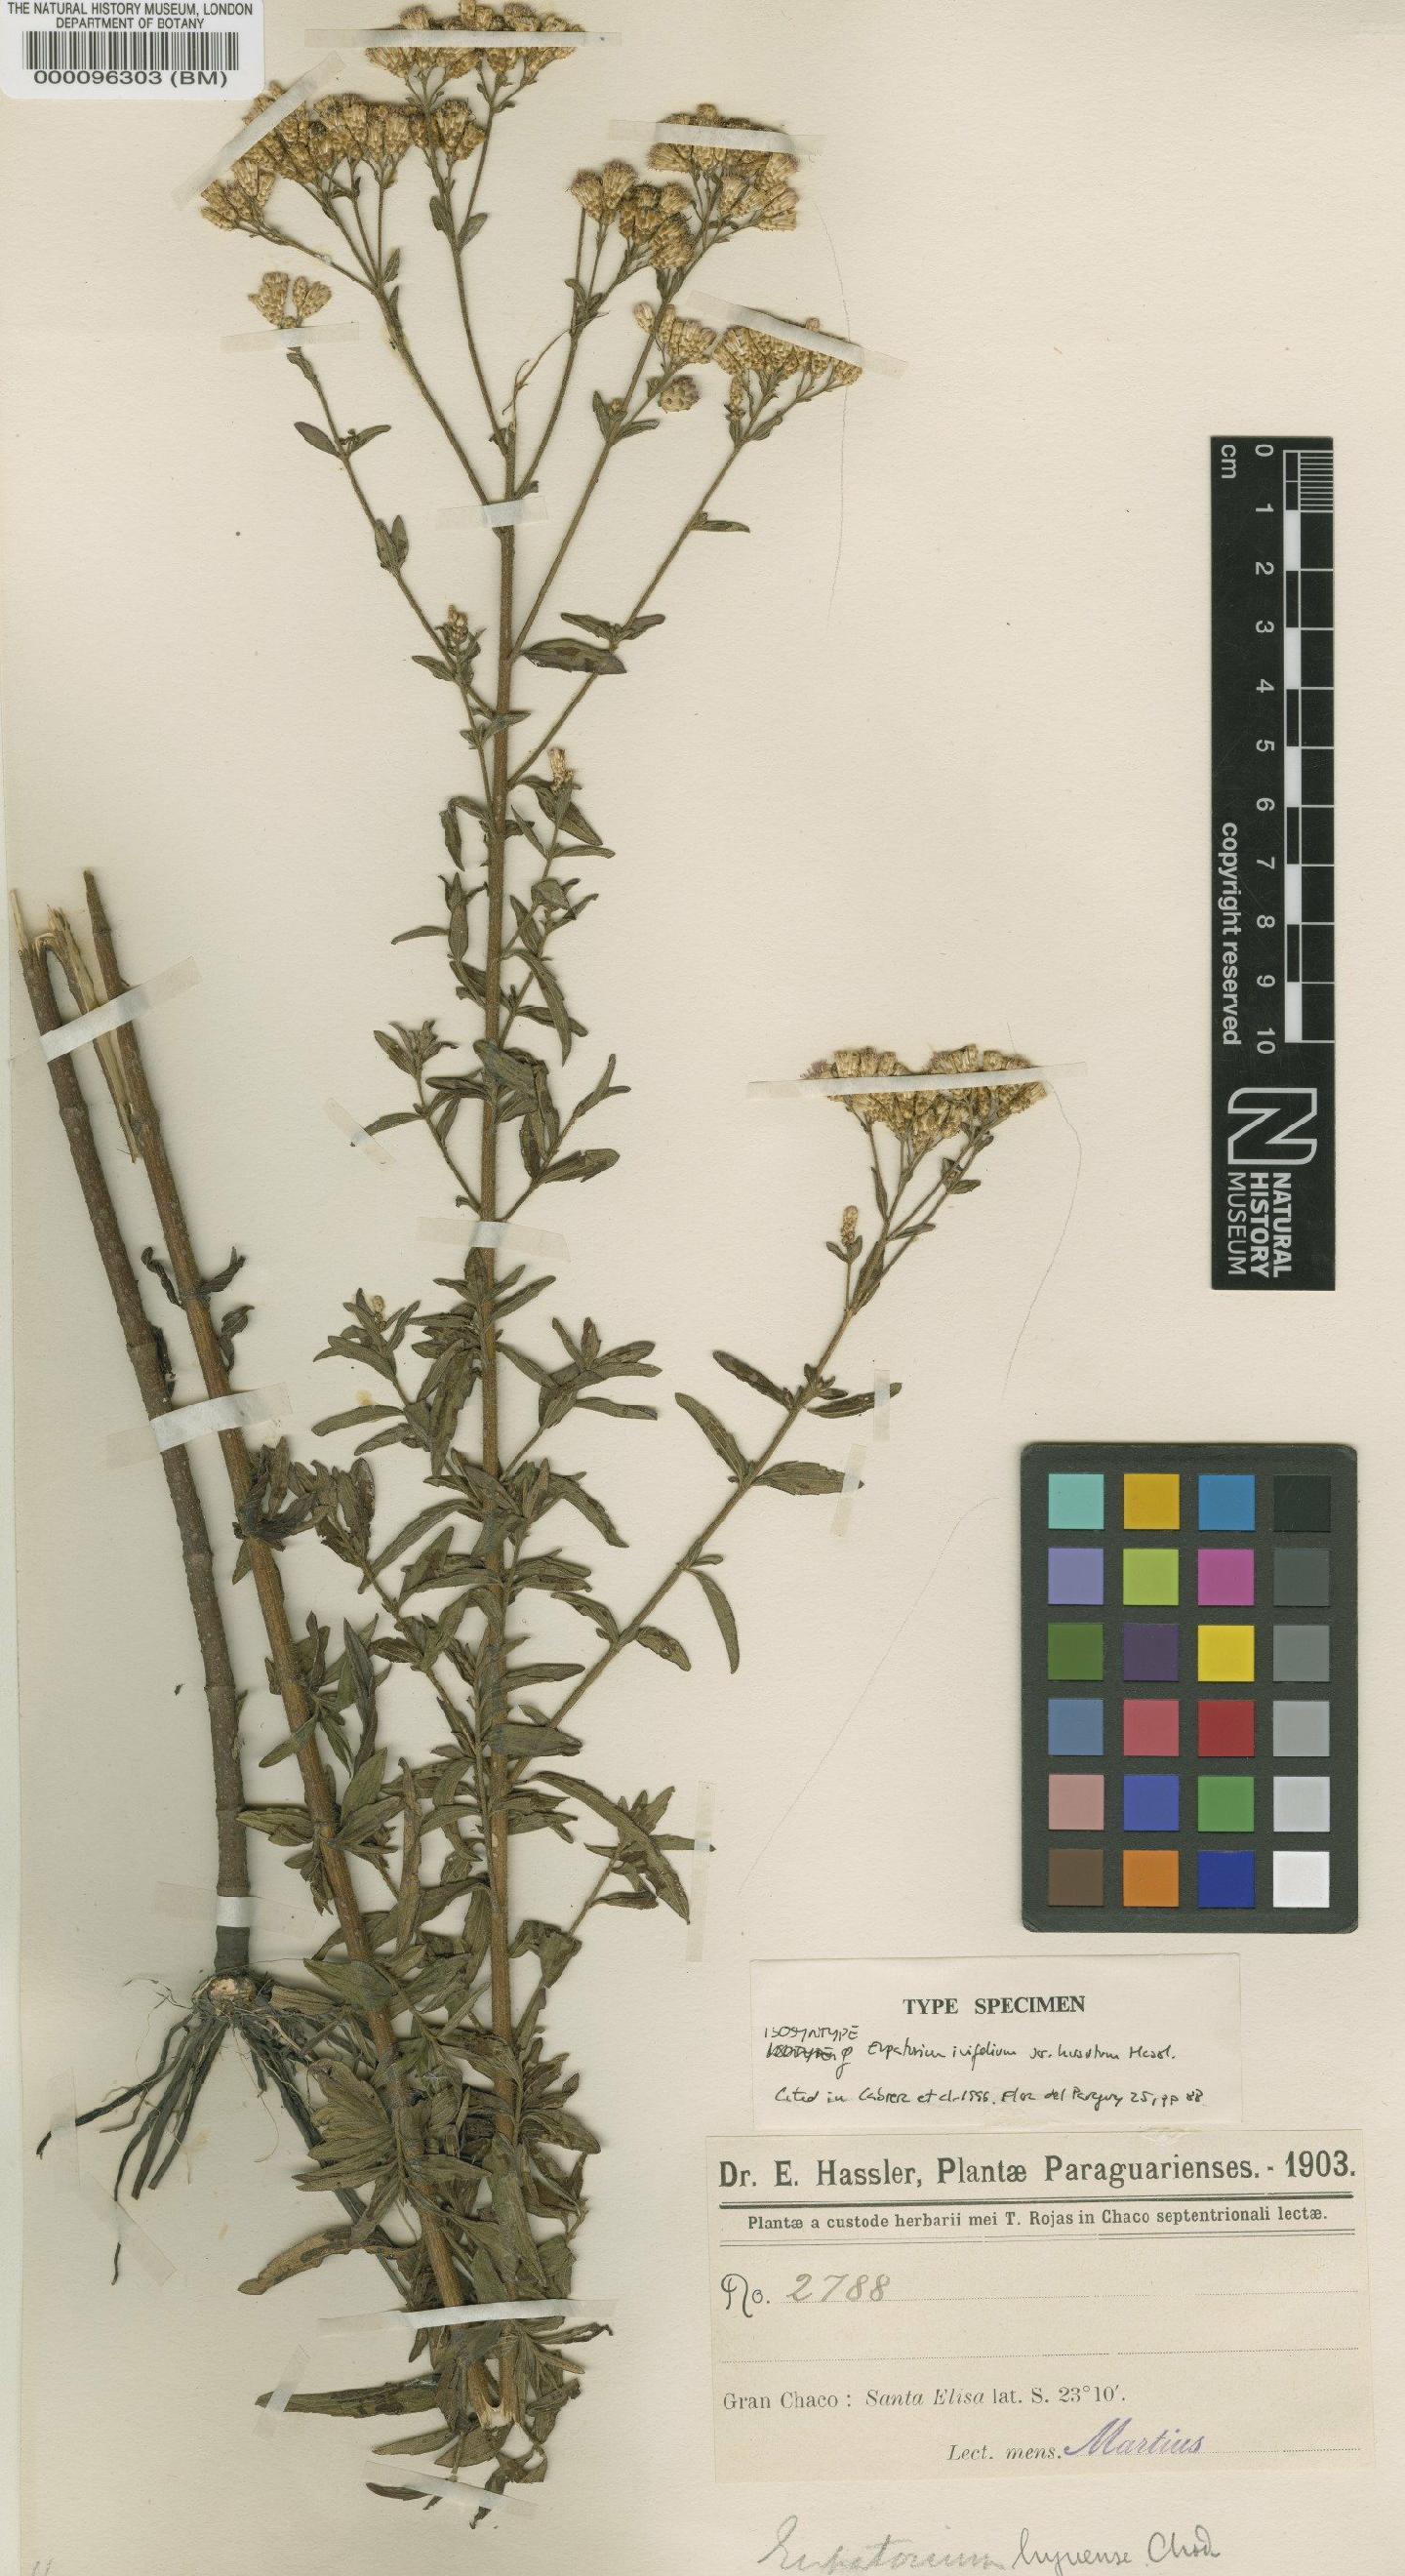 To NHMUK collection (Eupatorium ivifolium var. hirsutum Hassl.; Isosyntype; NHMUK:ecatalogue:4566826)